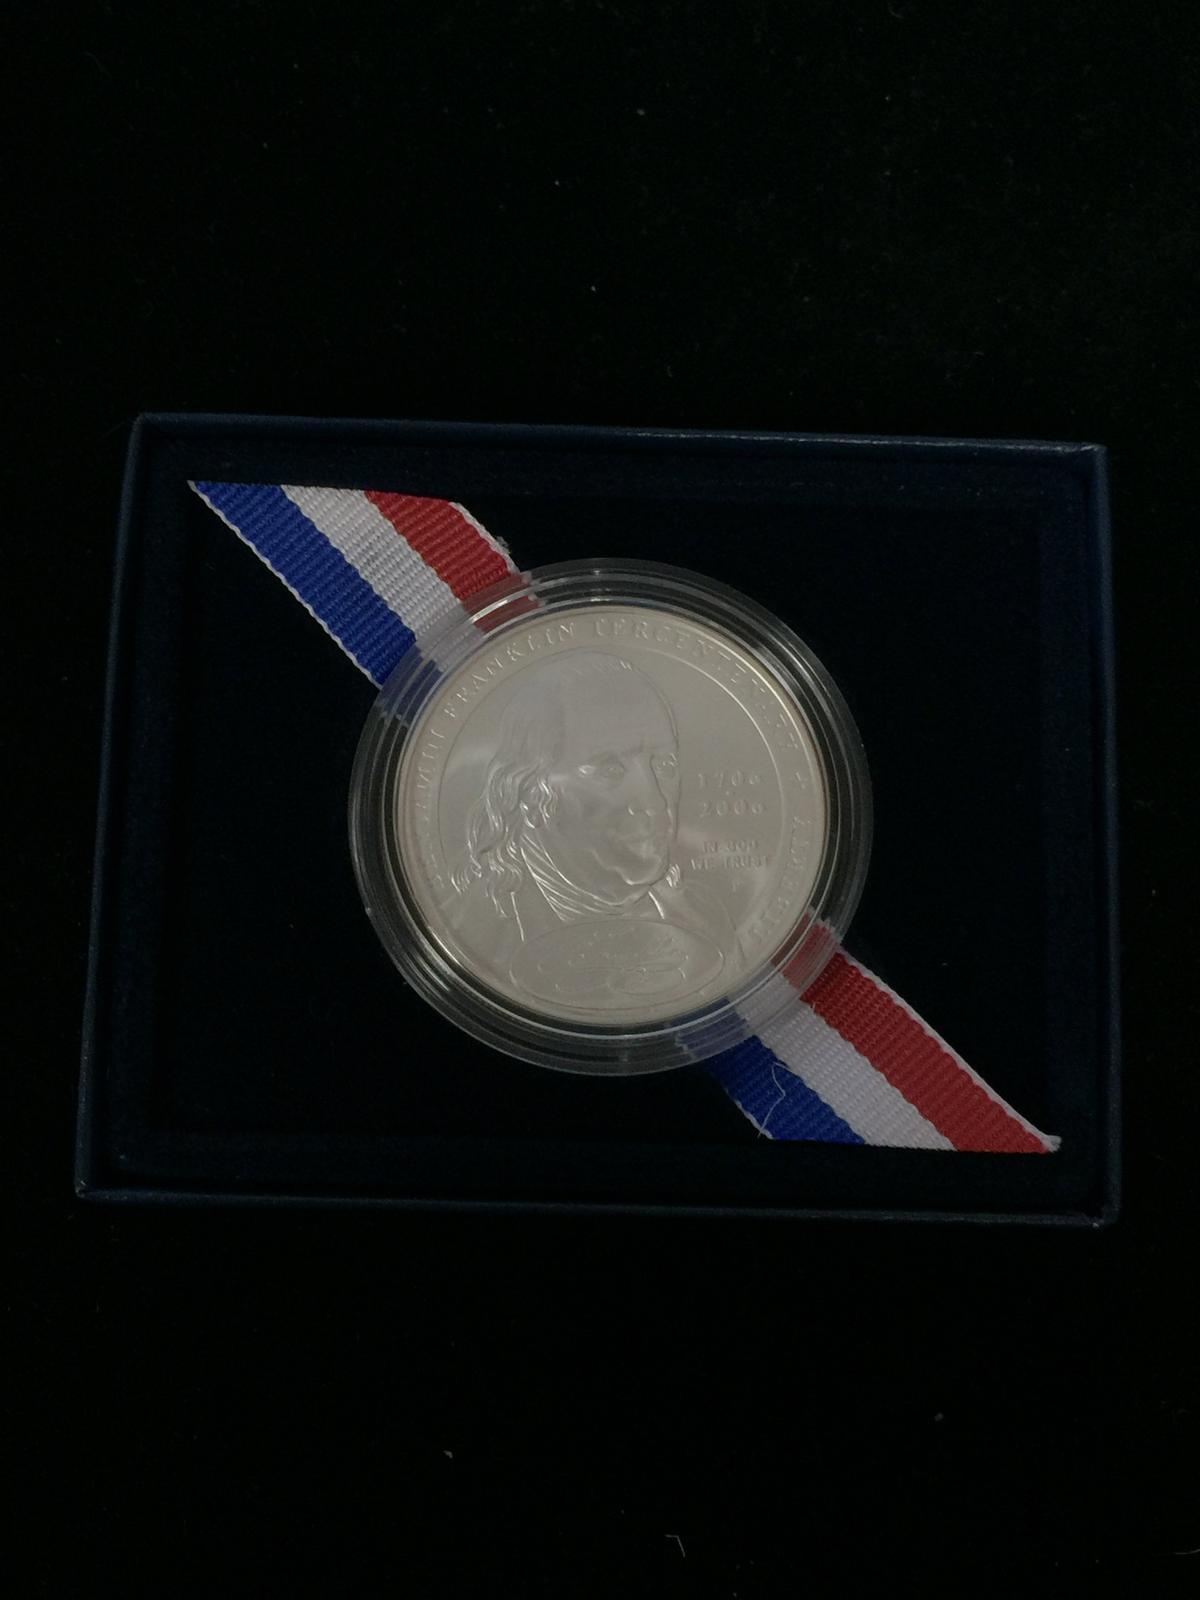 United States Mint 2006 Benjamin Franklin 90% Silver Dollar Commemorative Coin